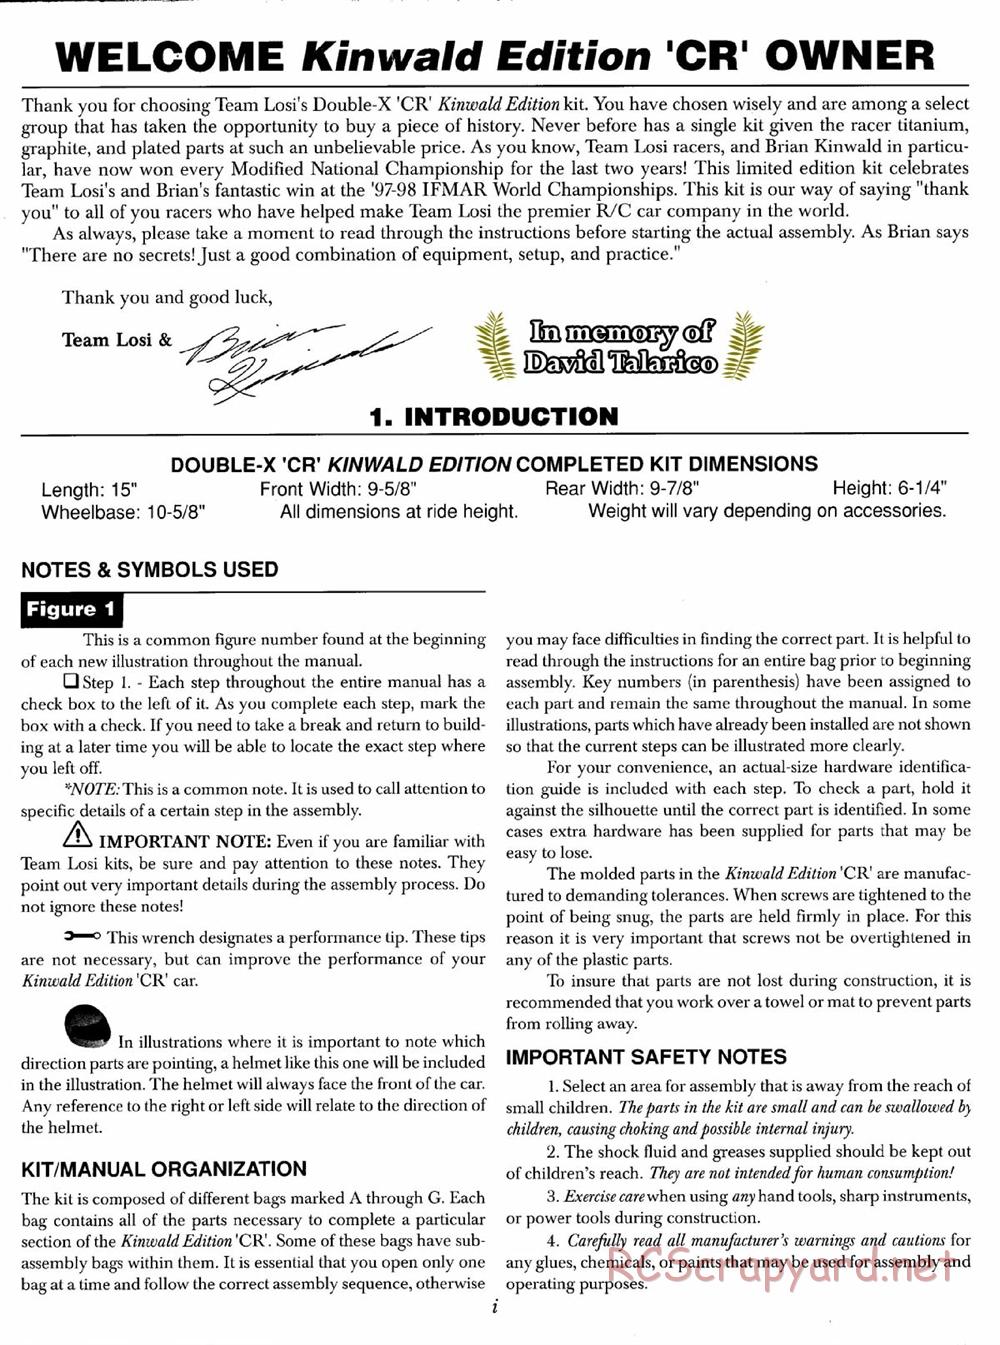 Team Losi - XX CR Kinwald Edition - Manual - Page 2